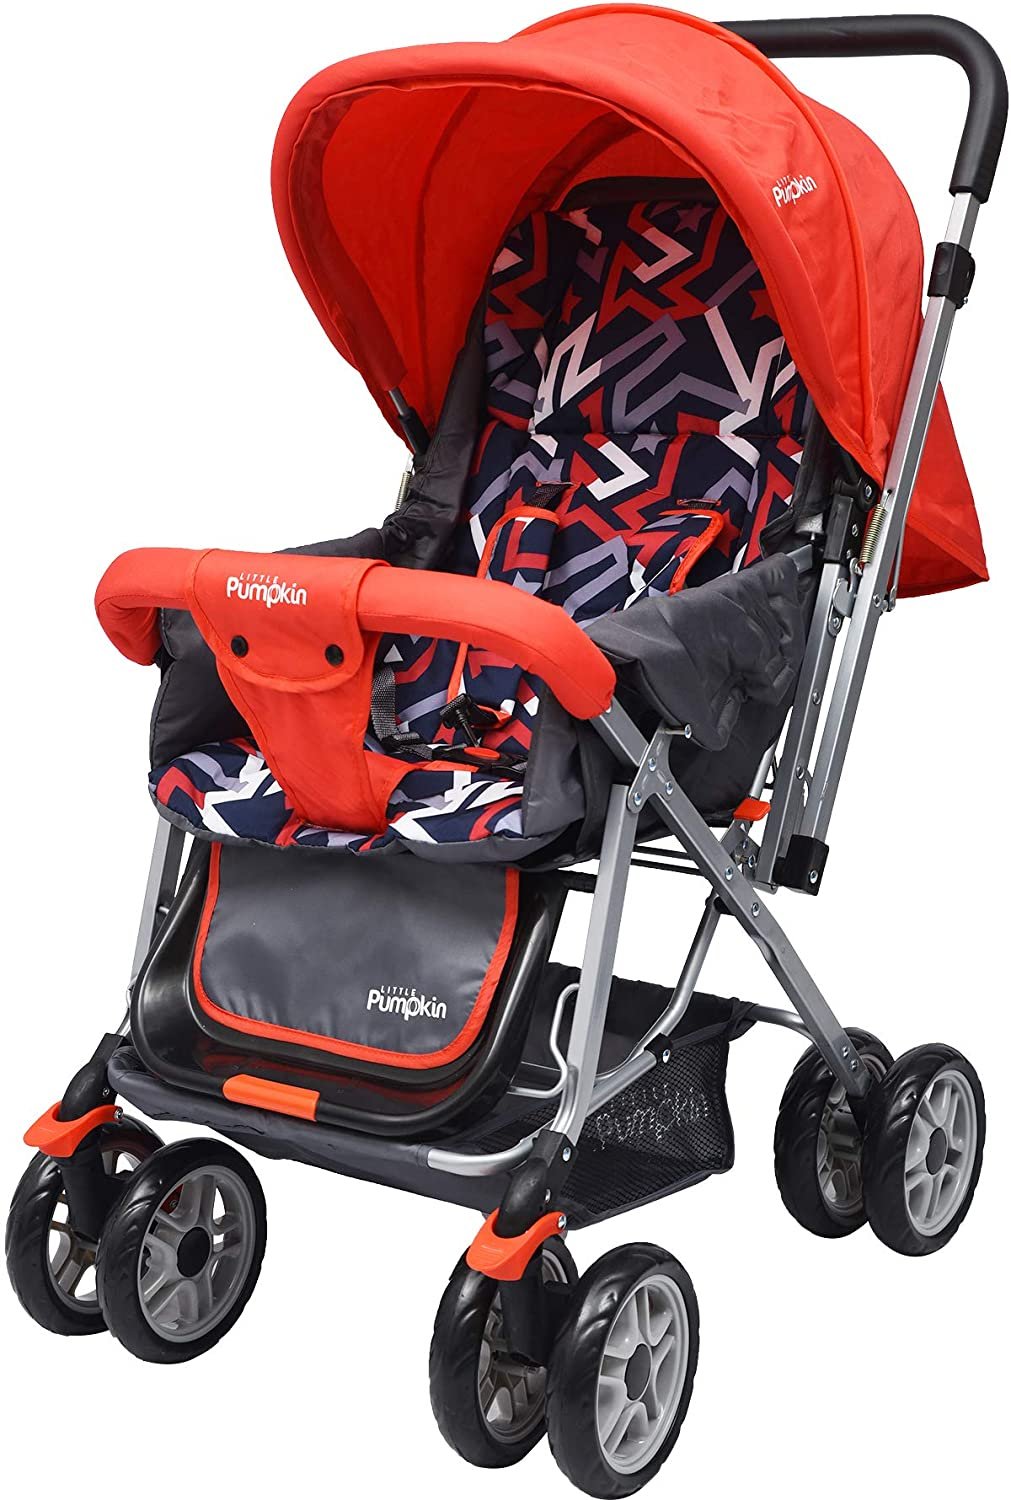 Little Pumpkin Kiddie Kingdom Stroller/Pram for Baby | Kids | Infants | Newborn Boy & Girl